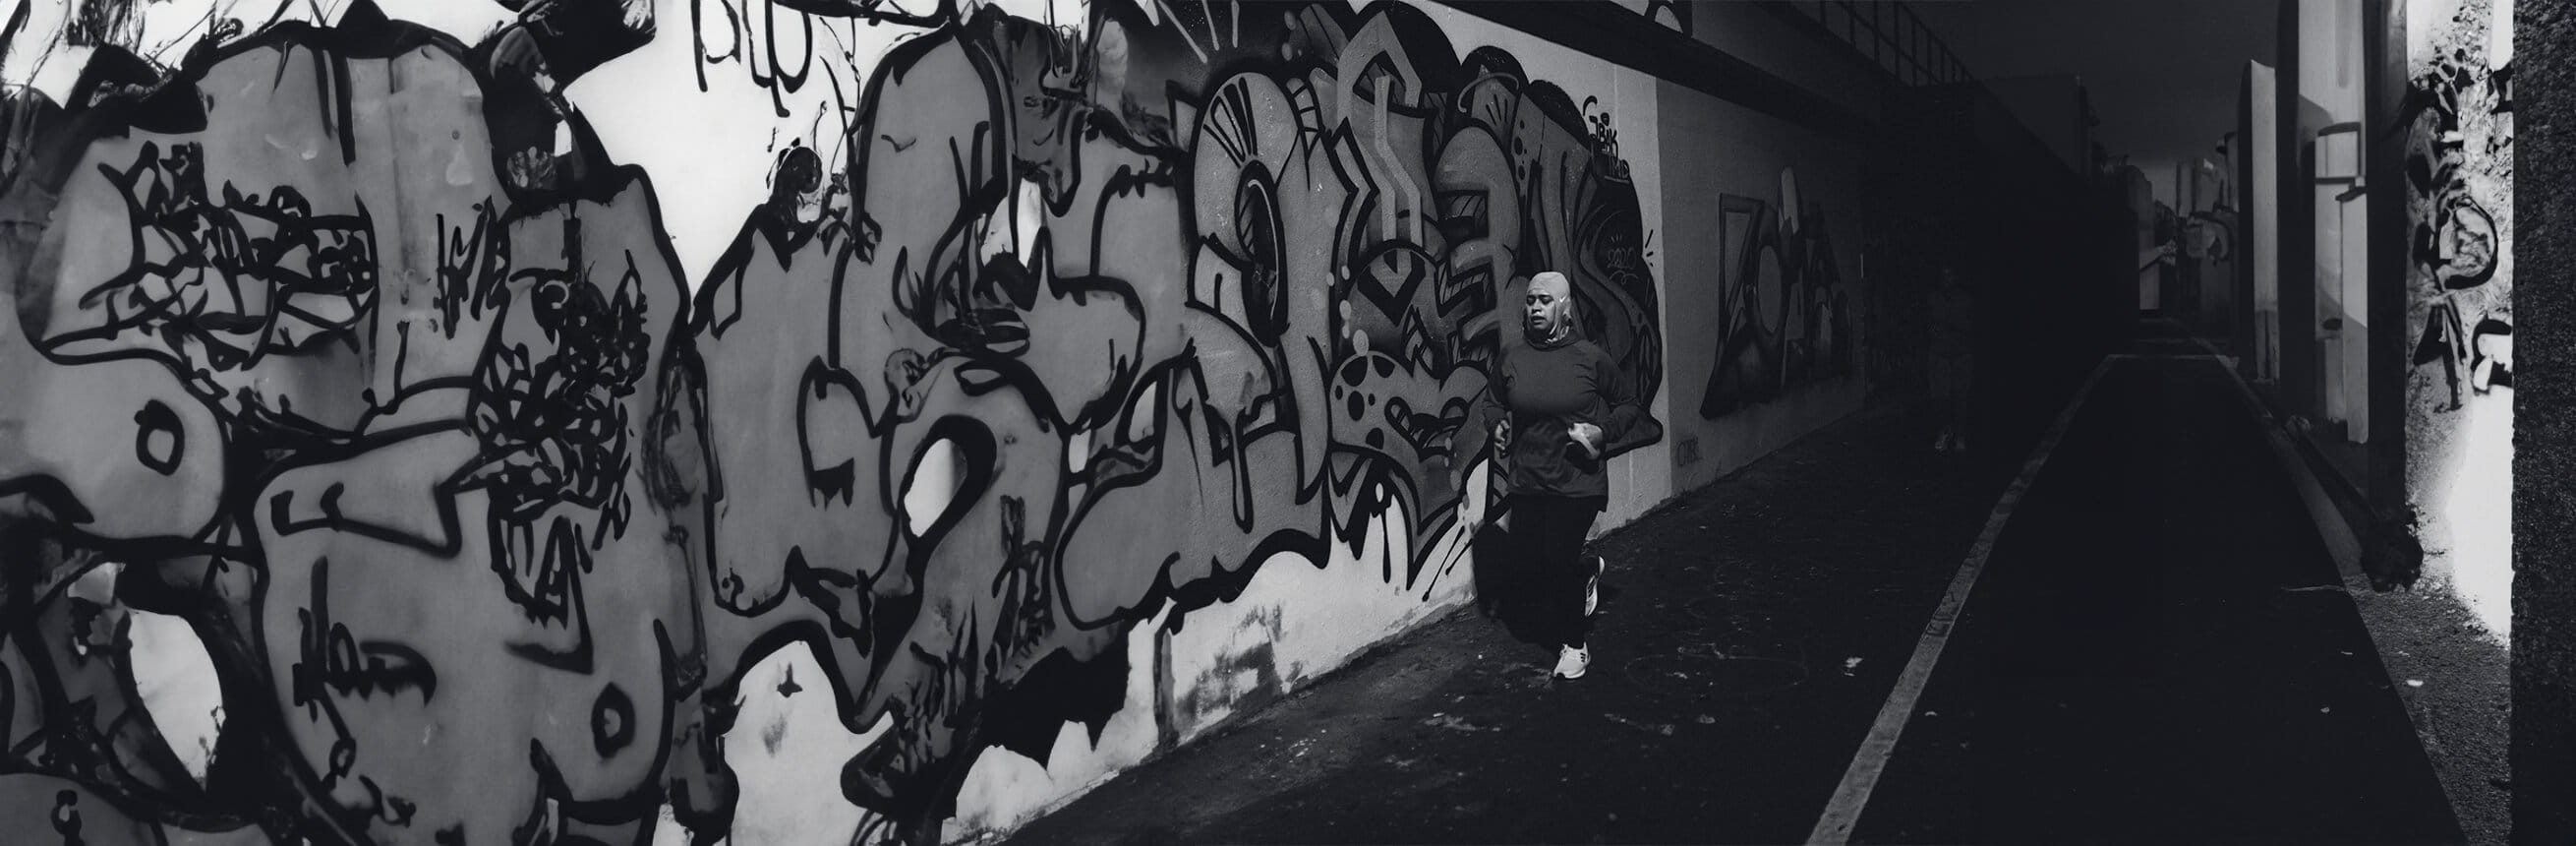 Local runner, Ruba Talukdar running. through an urban alley with graffiti on the walls